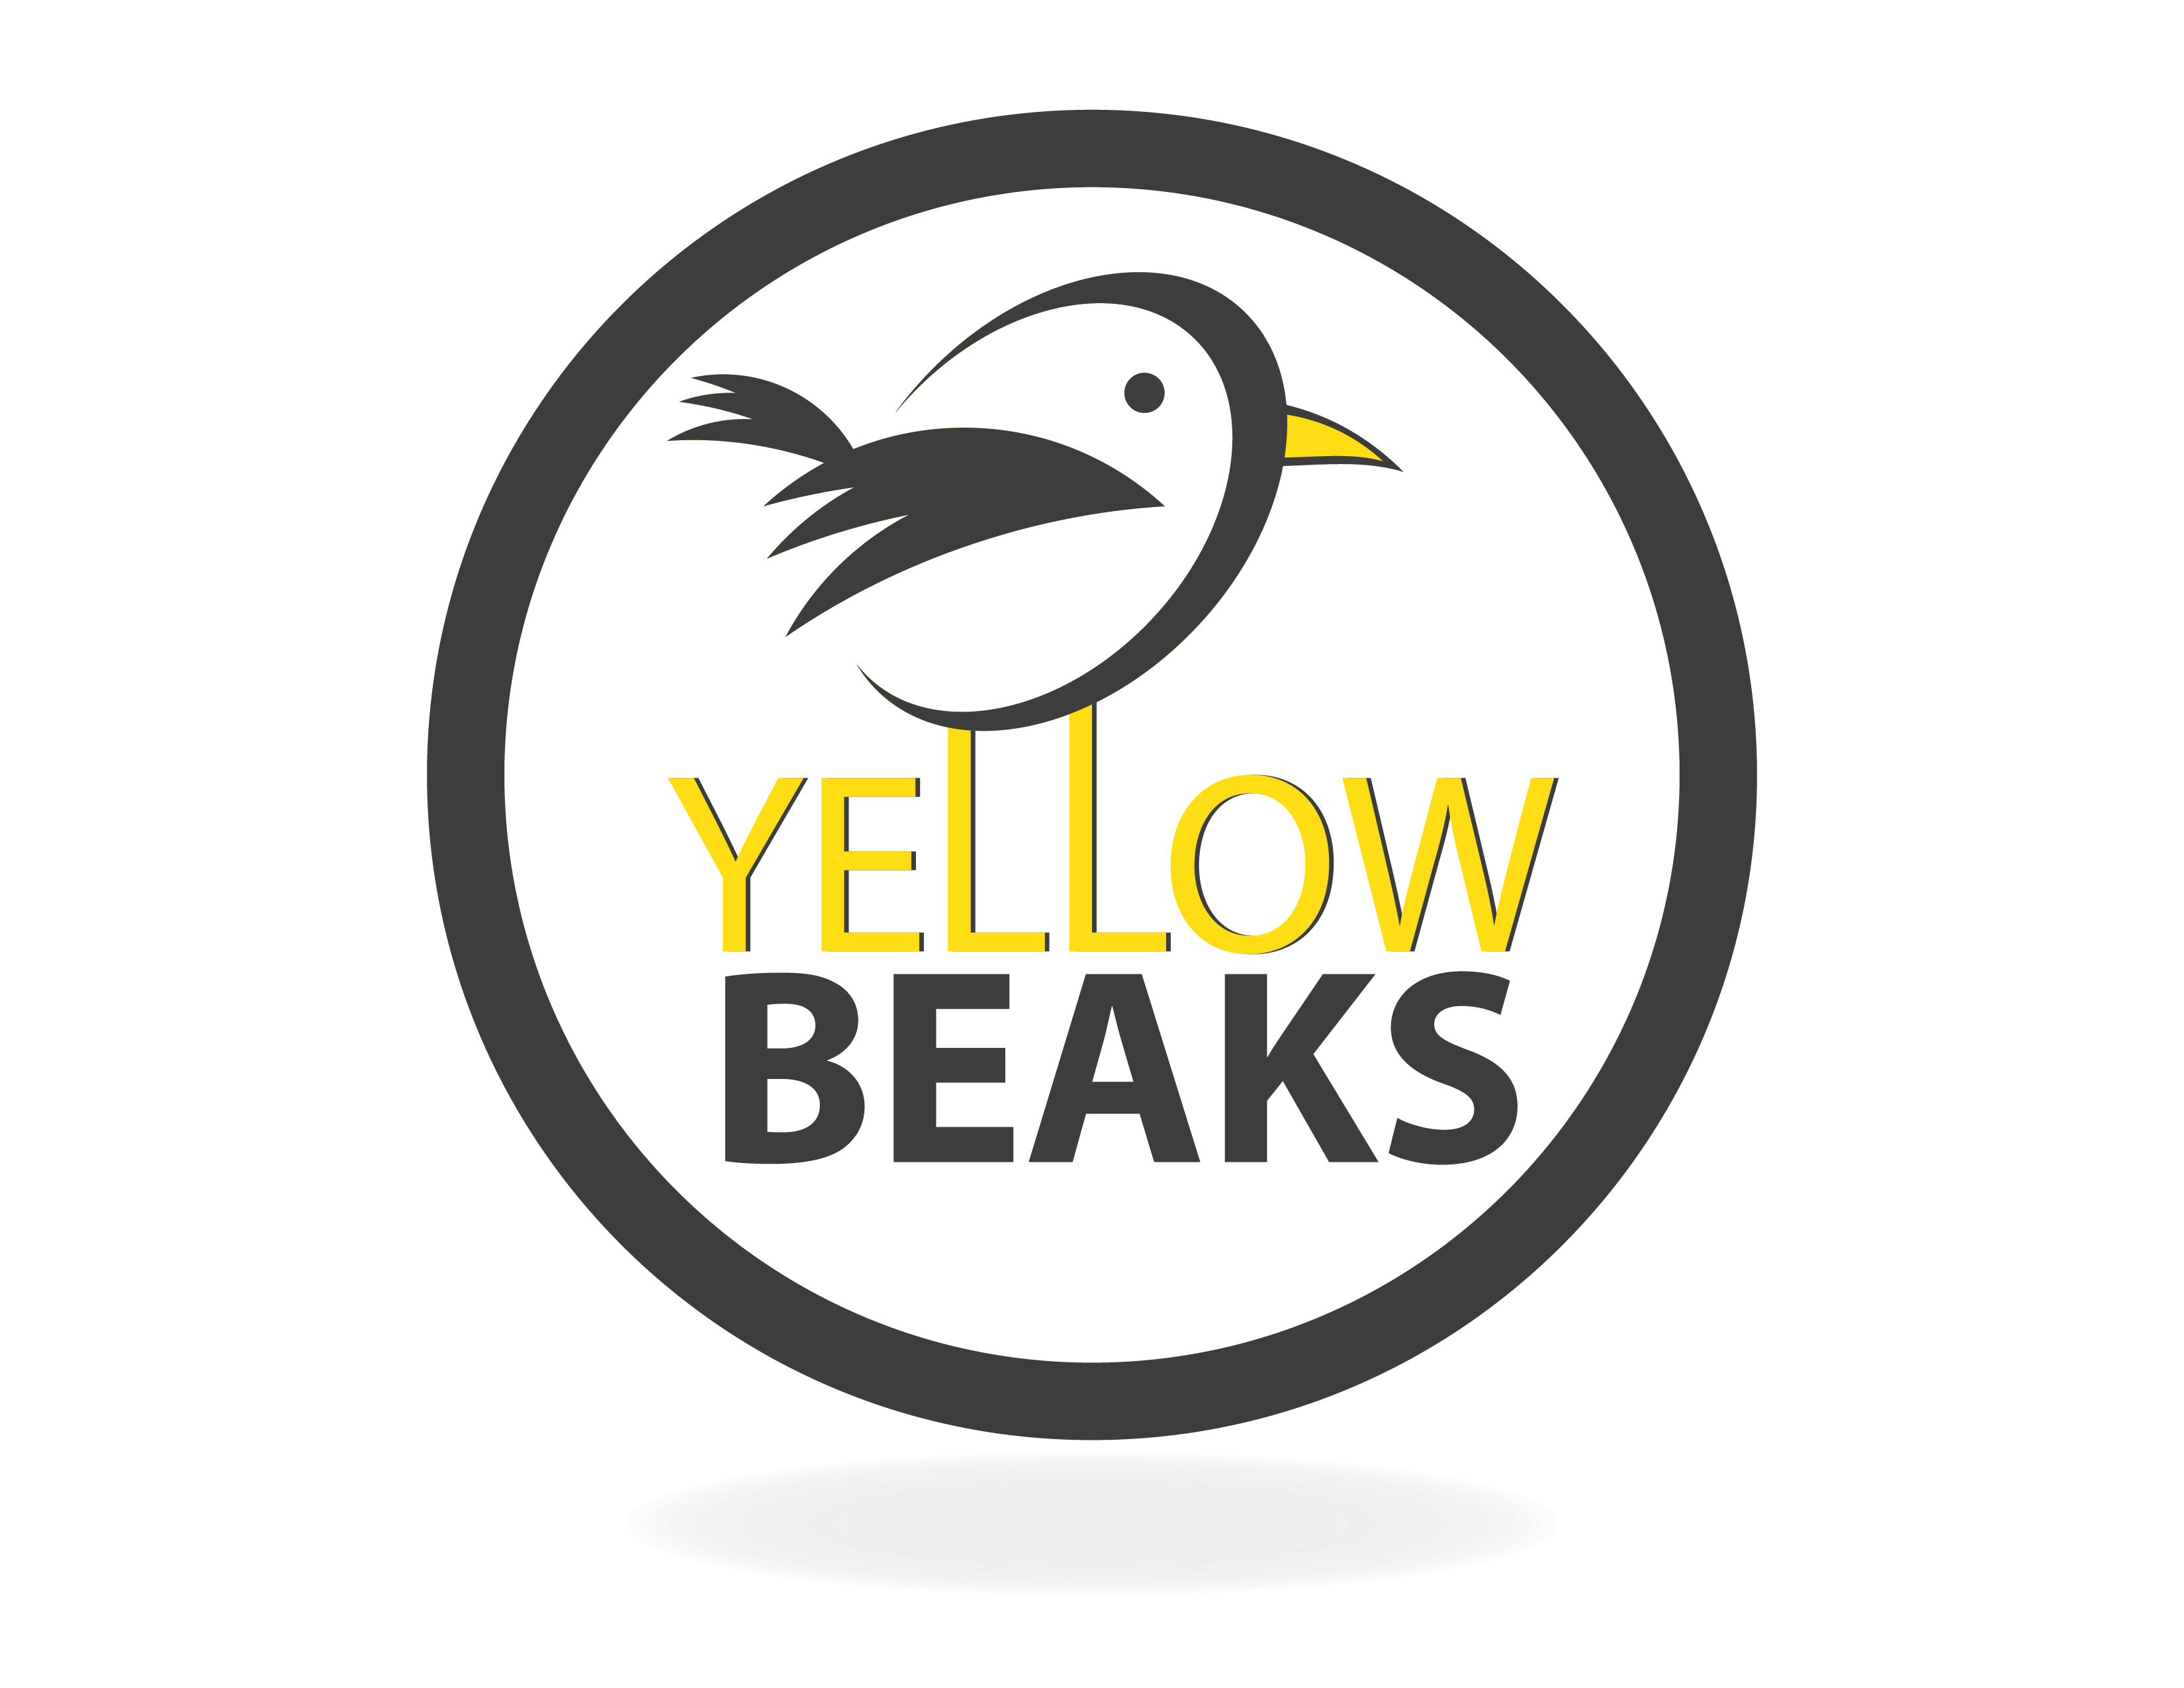 Yellow Bird in Yellow Circle Logo - Welcome To Yellow Beaks!